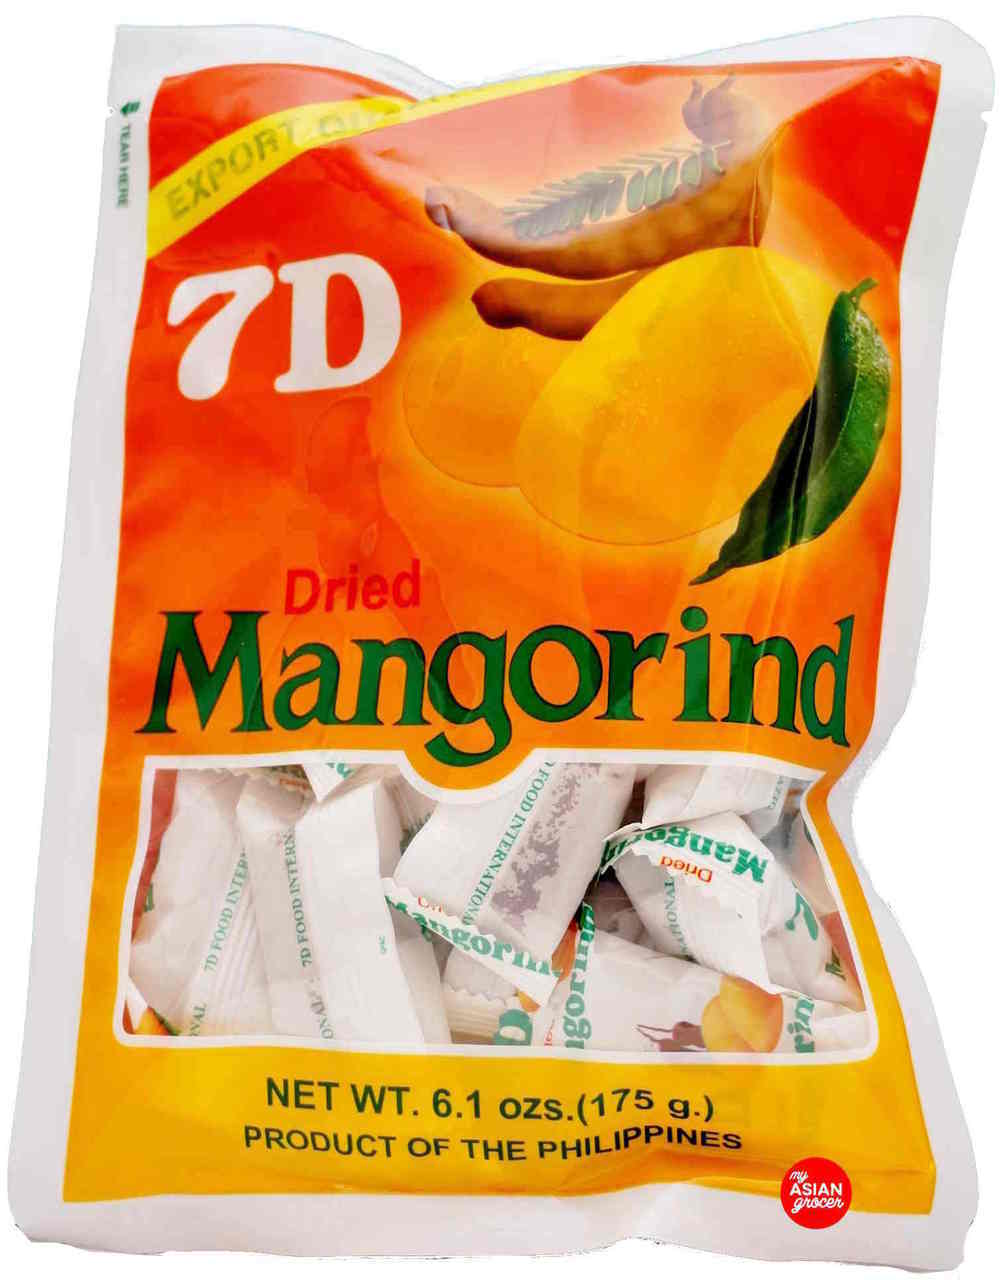 7D Dried Mangorind Candy - Sarap Now